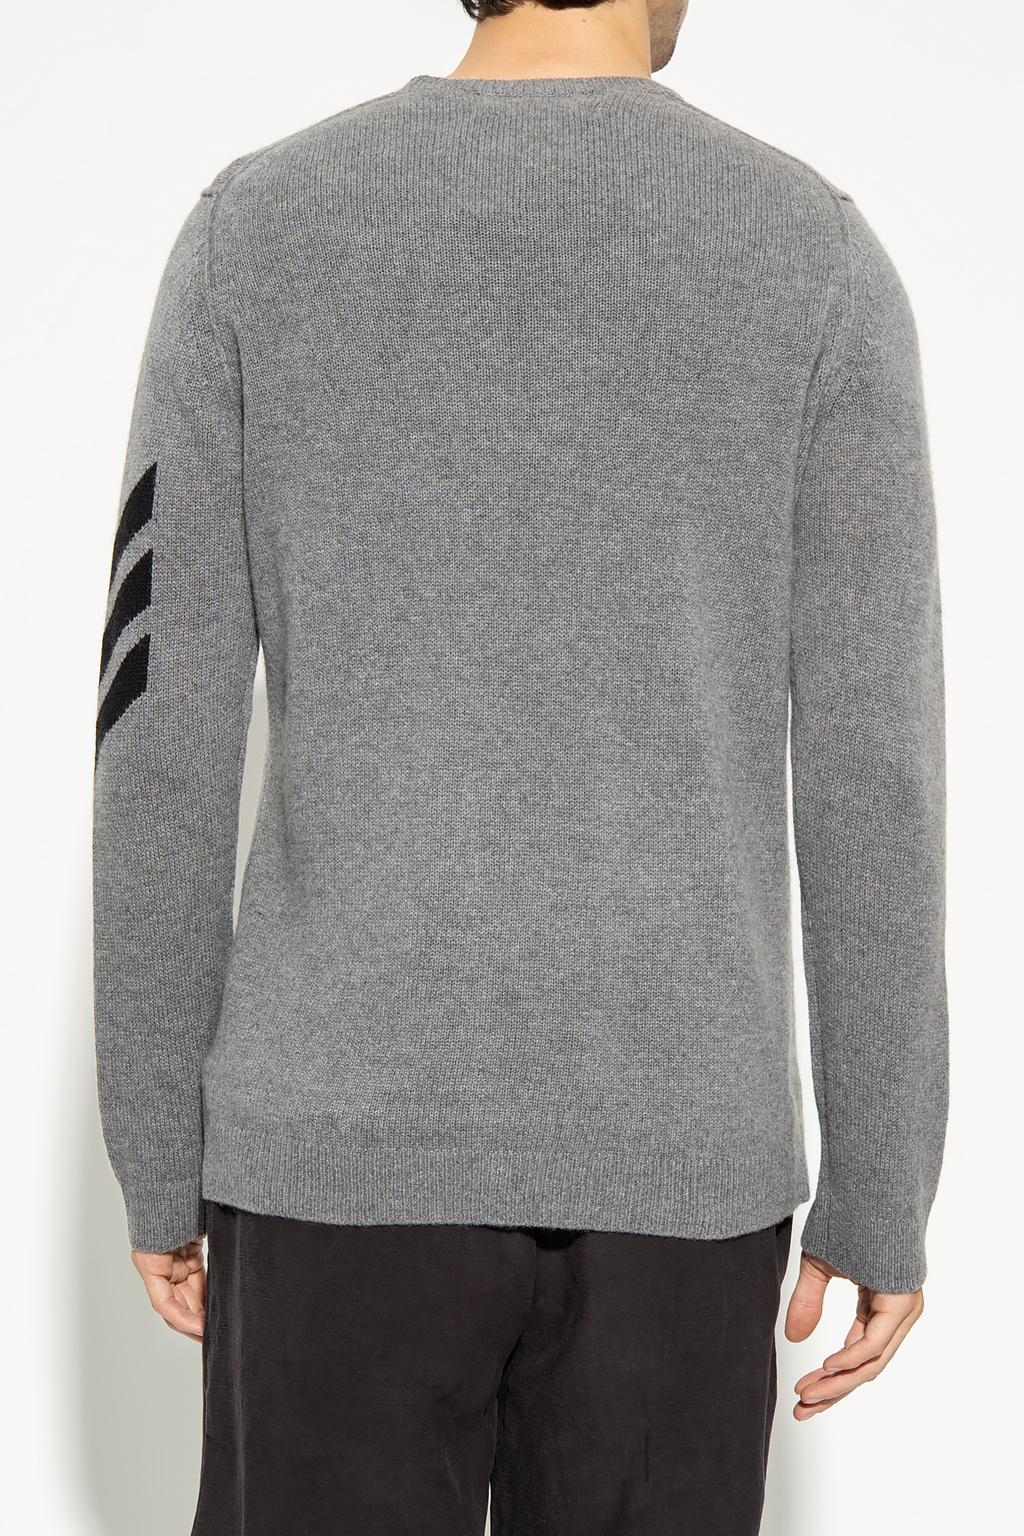 TEEN metallic detail sweatshirt dress ‘Kennedy’ cashmere sweater